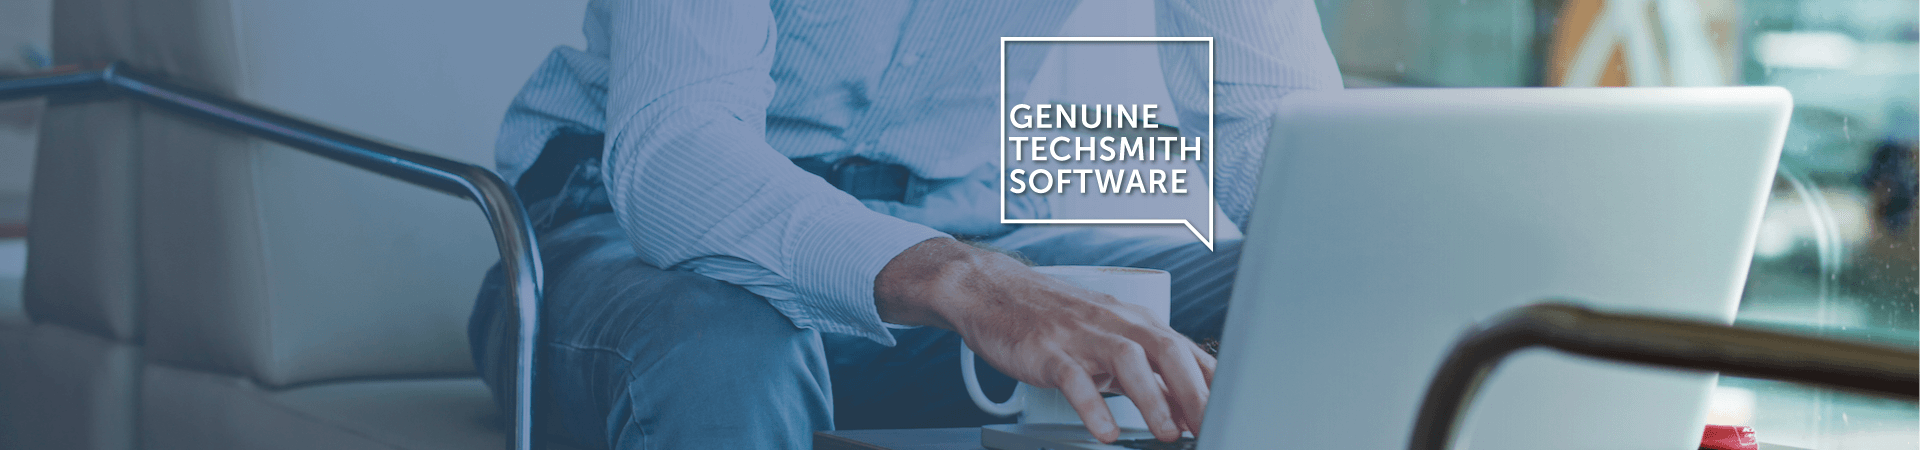 Genuine TechSmith software